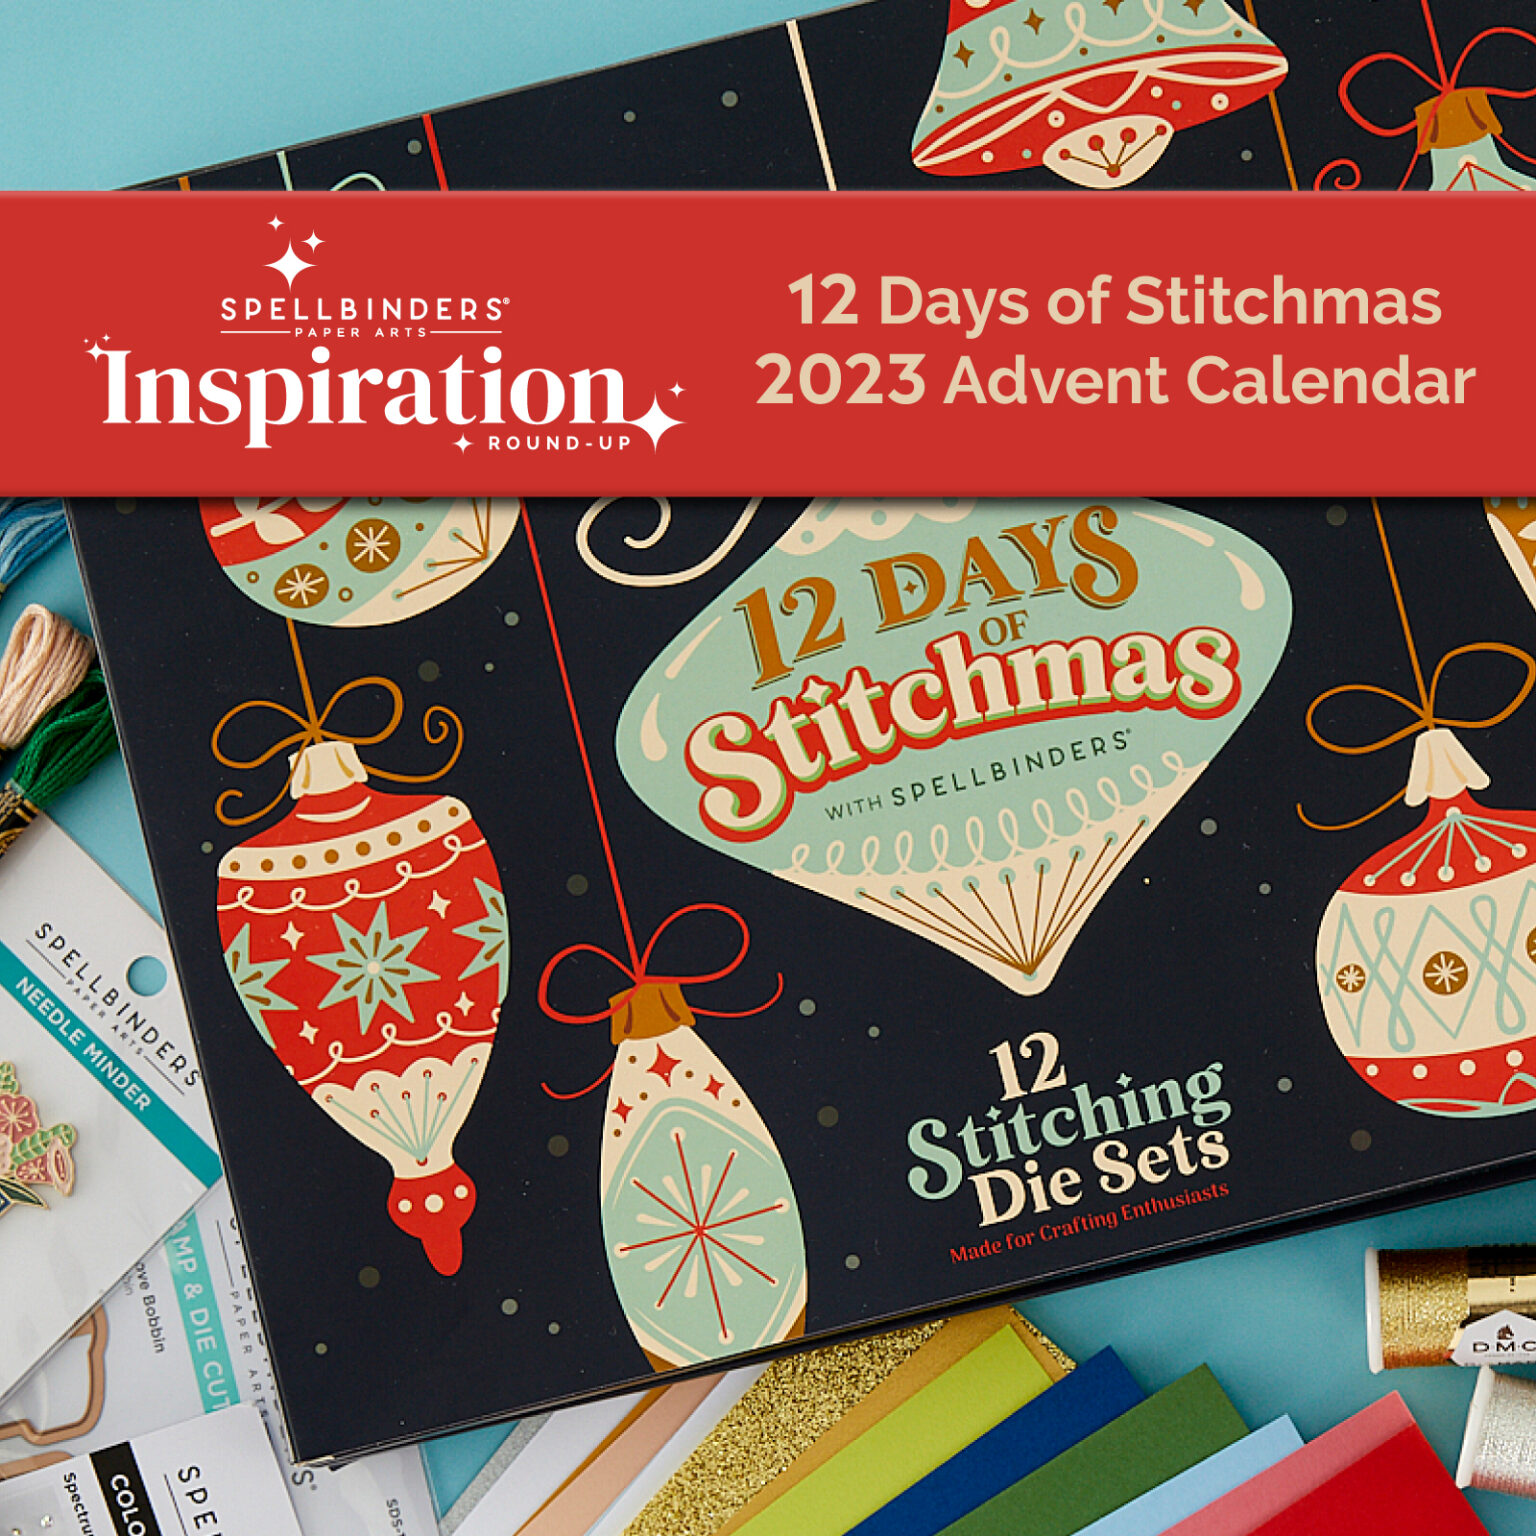 Spellbinders 2023 12 Days of Stitchmas Advent Calendar Inspiration